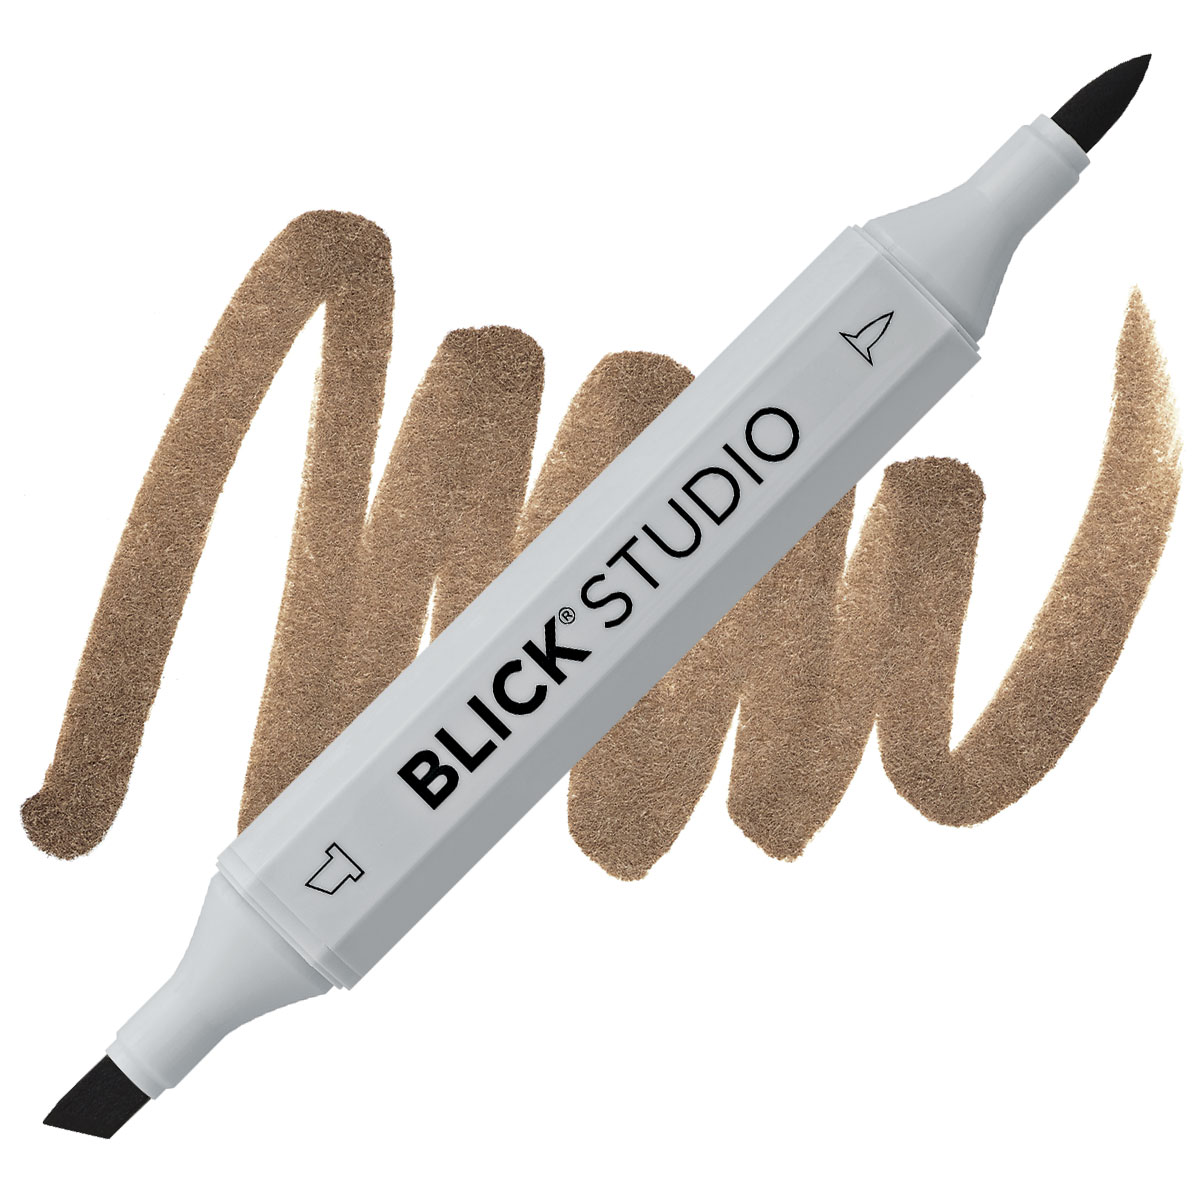 Blick Studio Brush Markers Color Chart